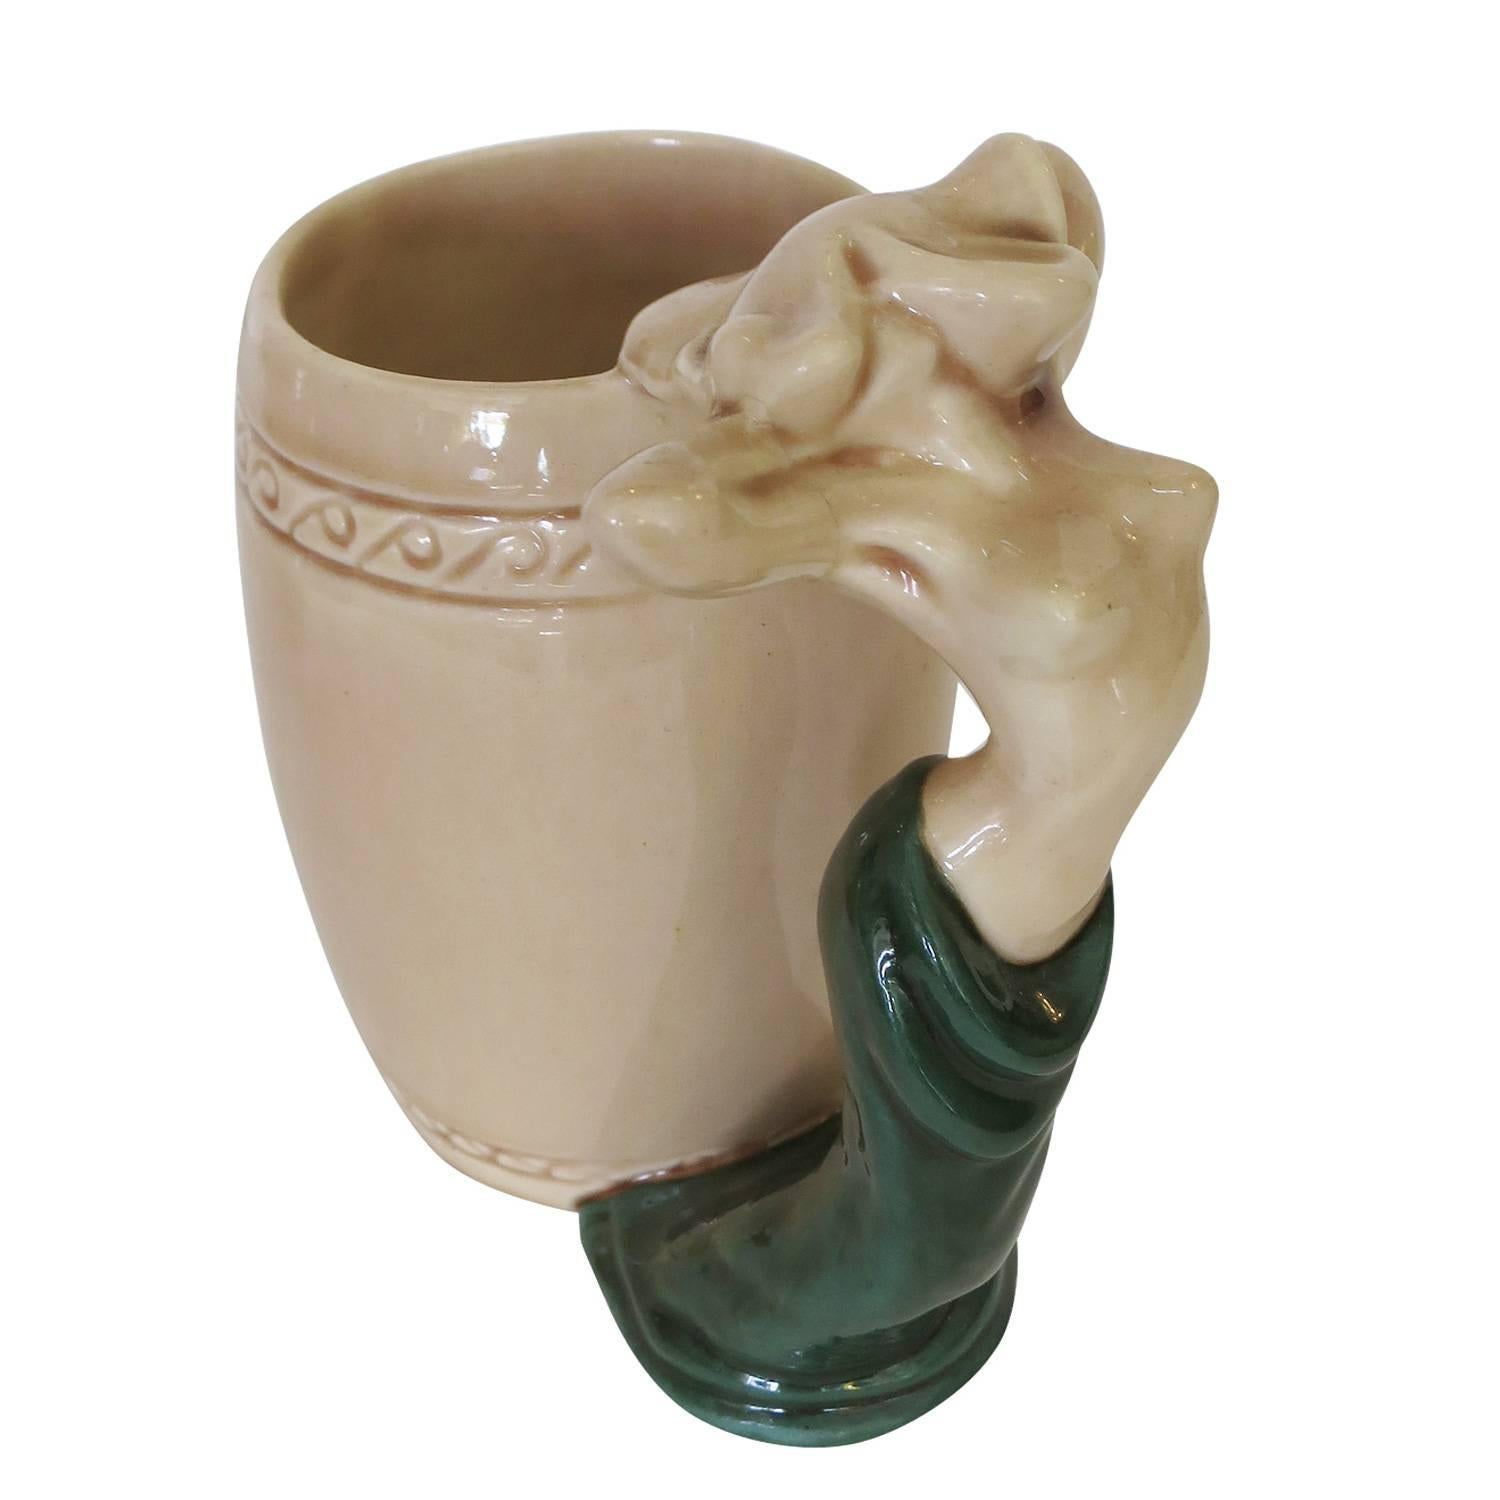 dorothy kindell pottery